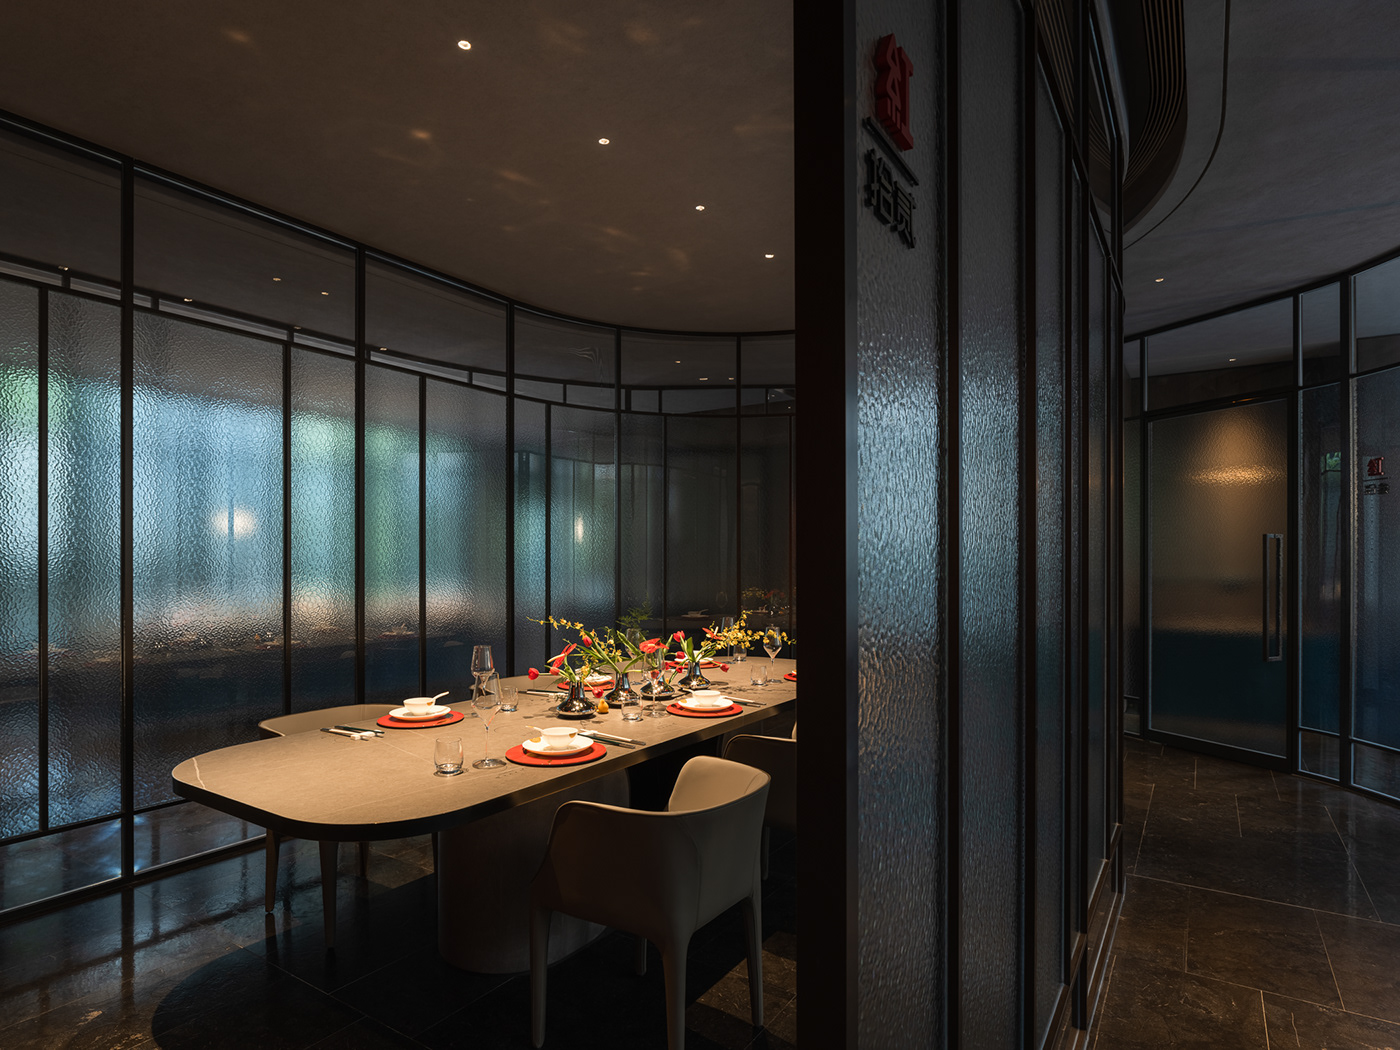 hotpot interior design  InteriorPhotography interiors modern Photography  RED MAN restaurant studio TEN Tan xiao